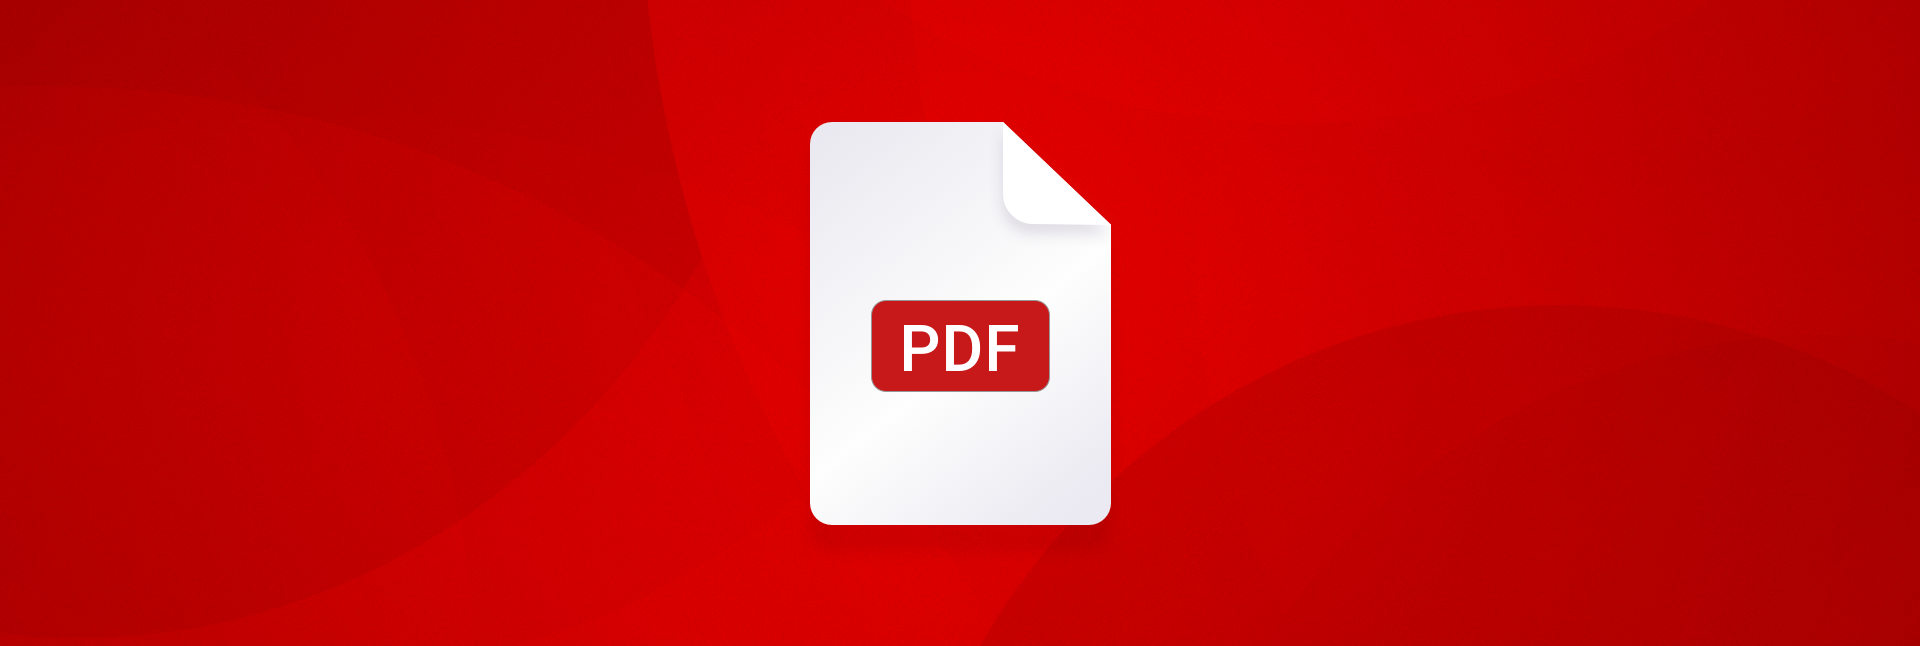 free pdf editor for mac